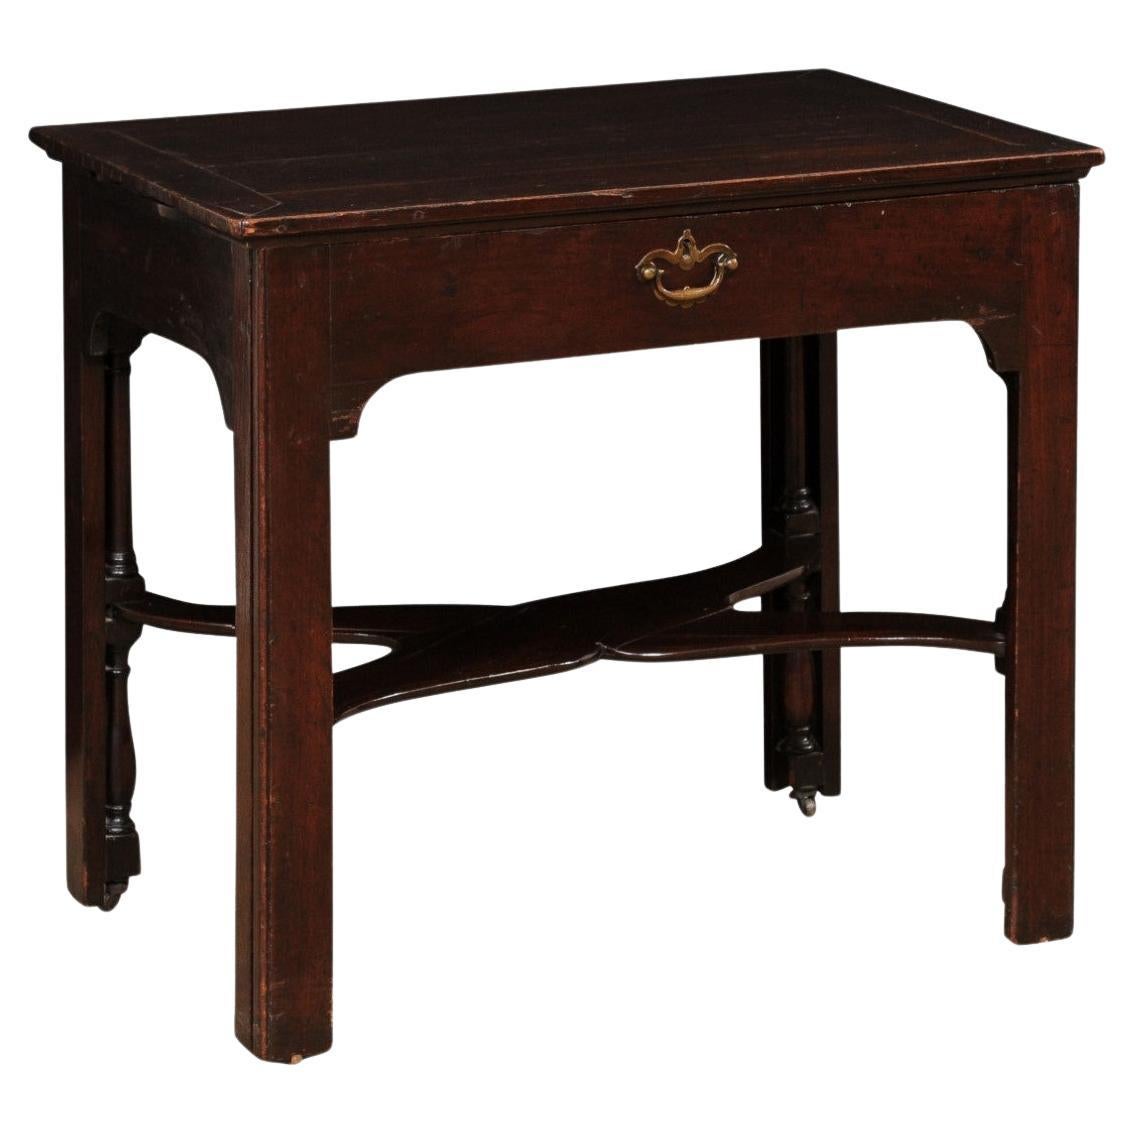 18th C. English Architect's Table w/Unique Legs, Expanding Top, & Candle Shelves